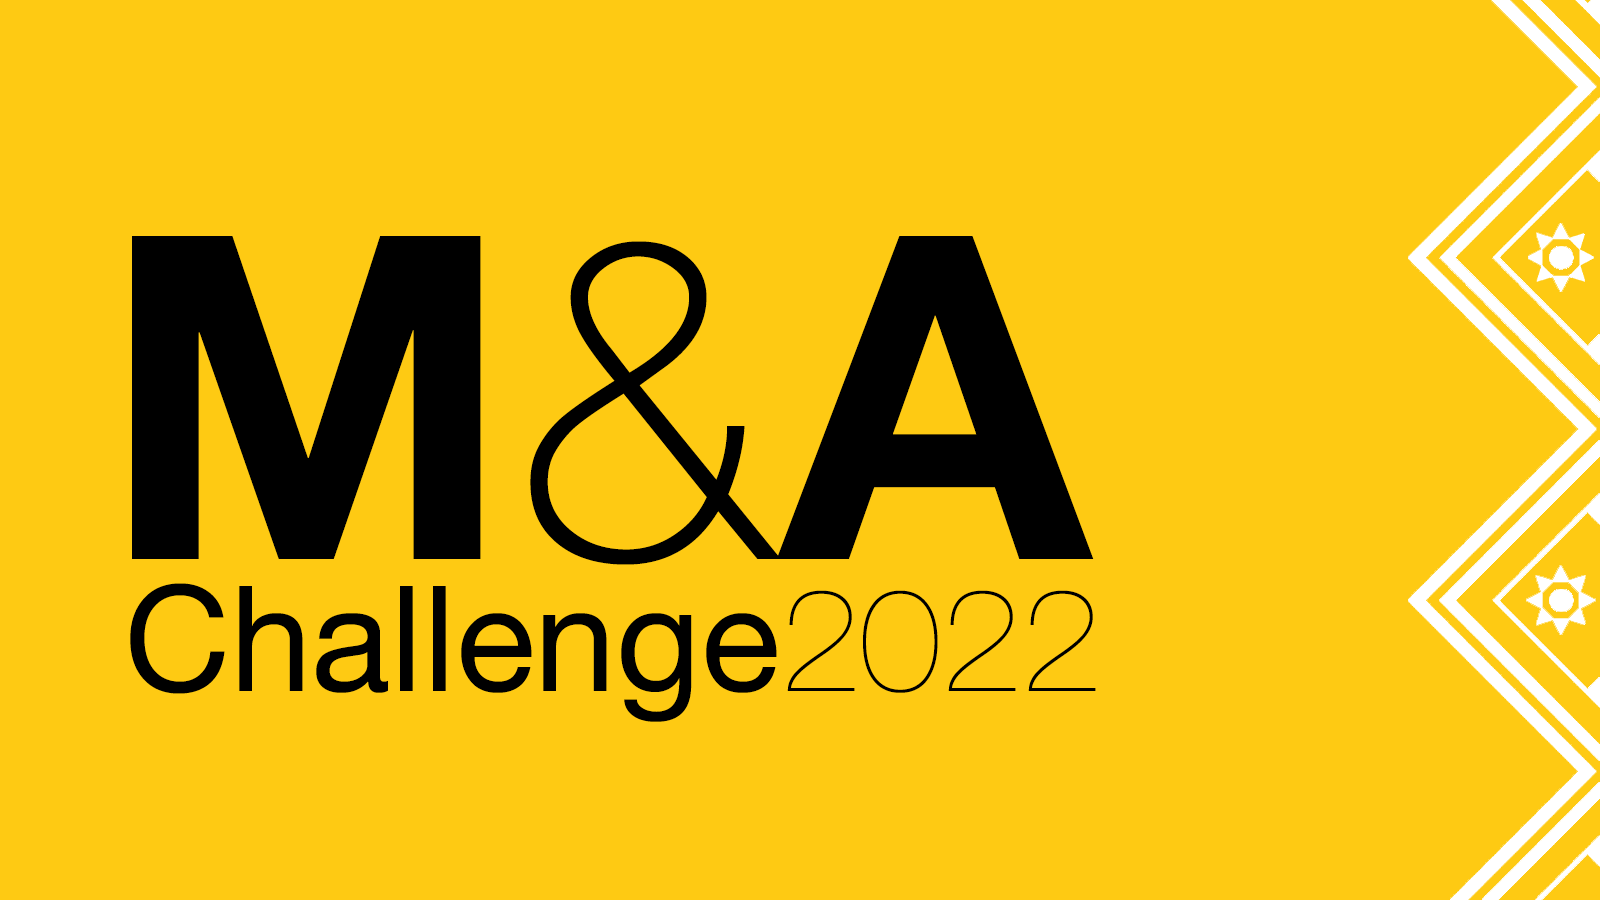 M&A Challenge 2022